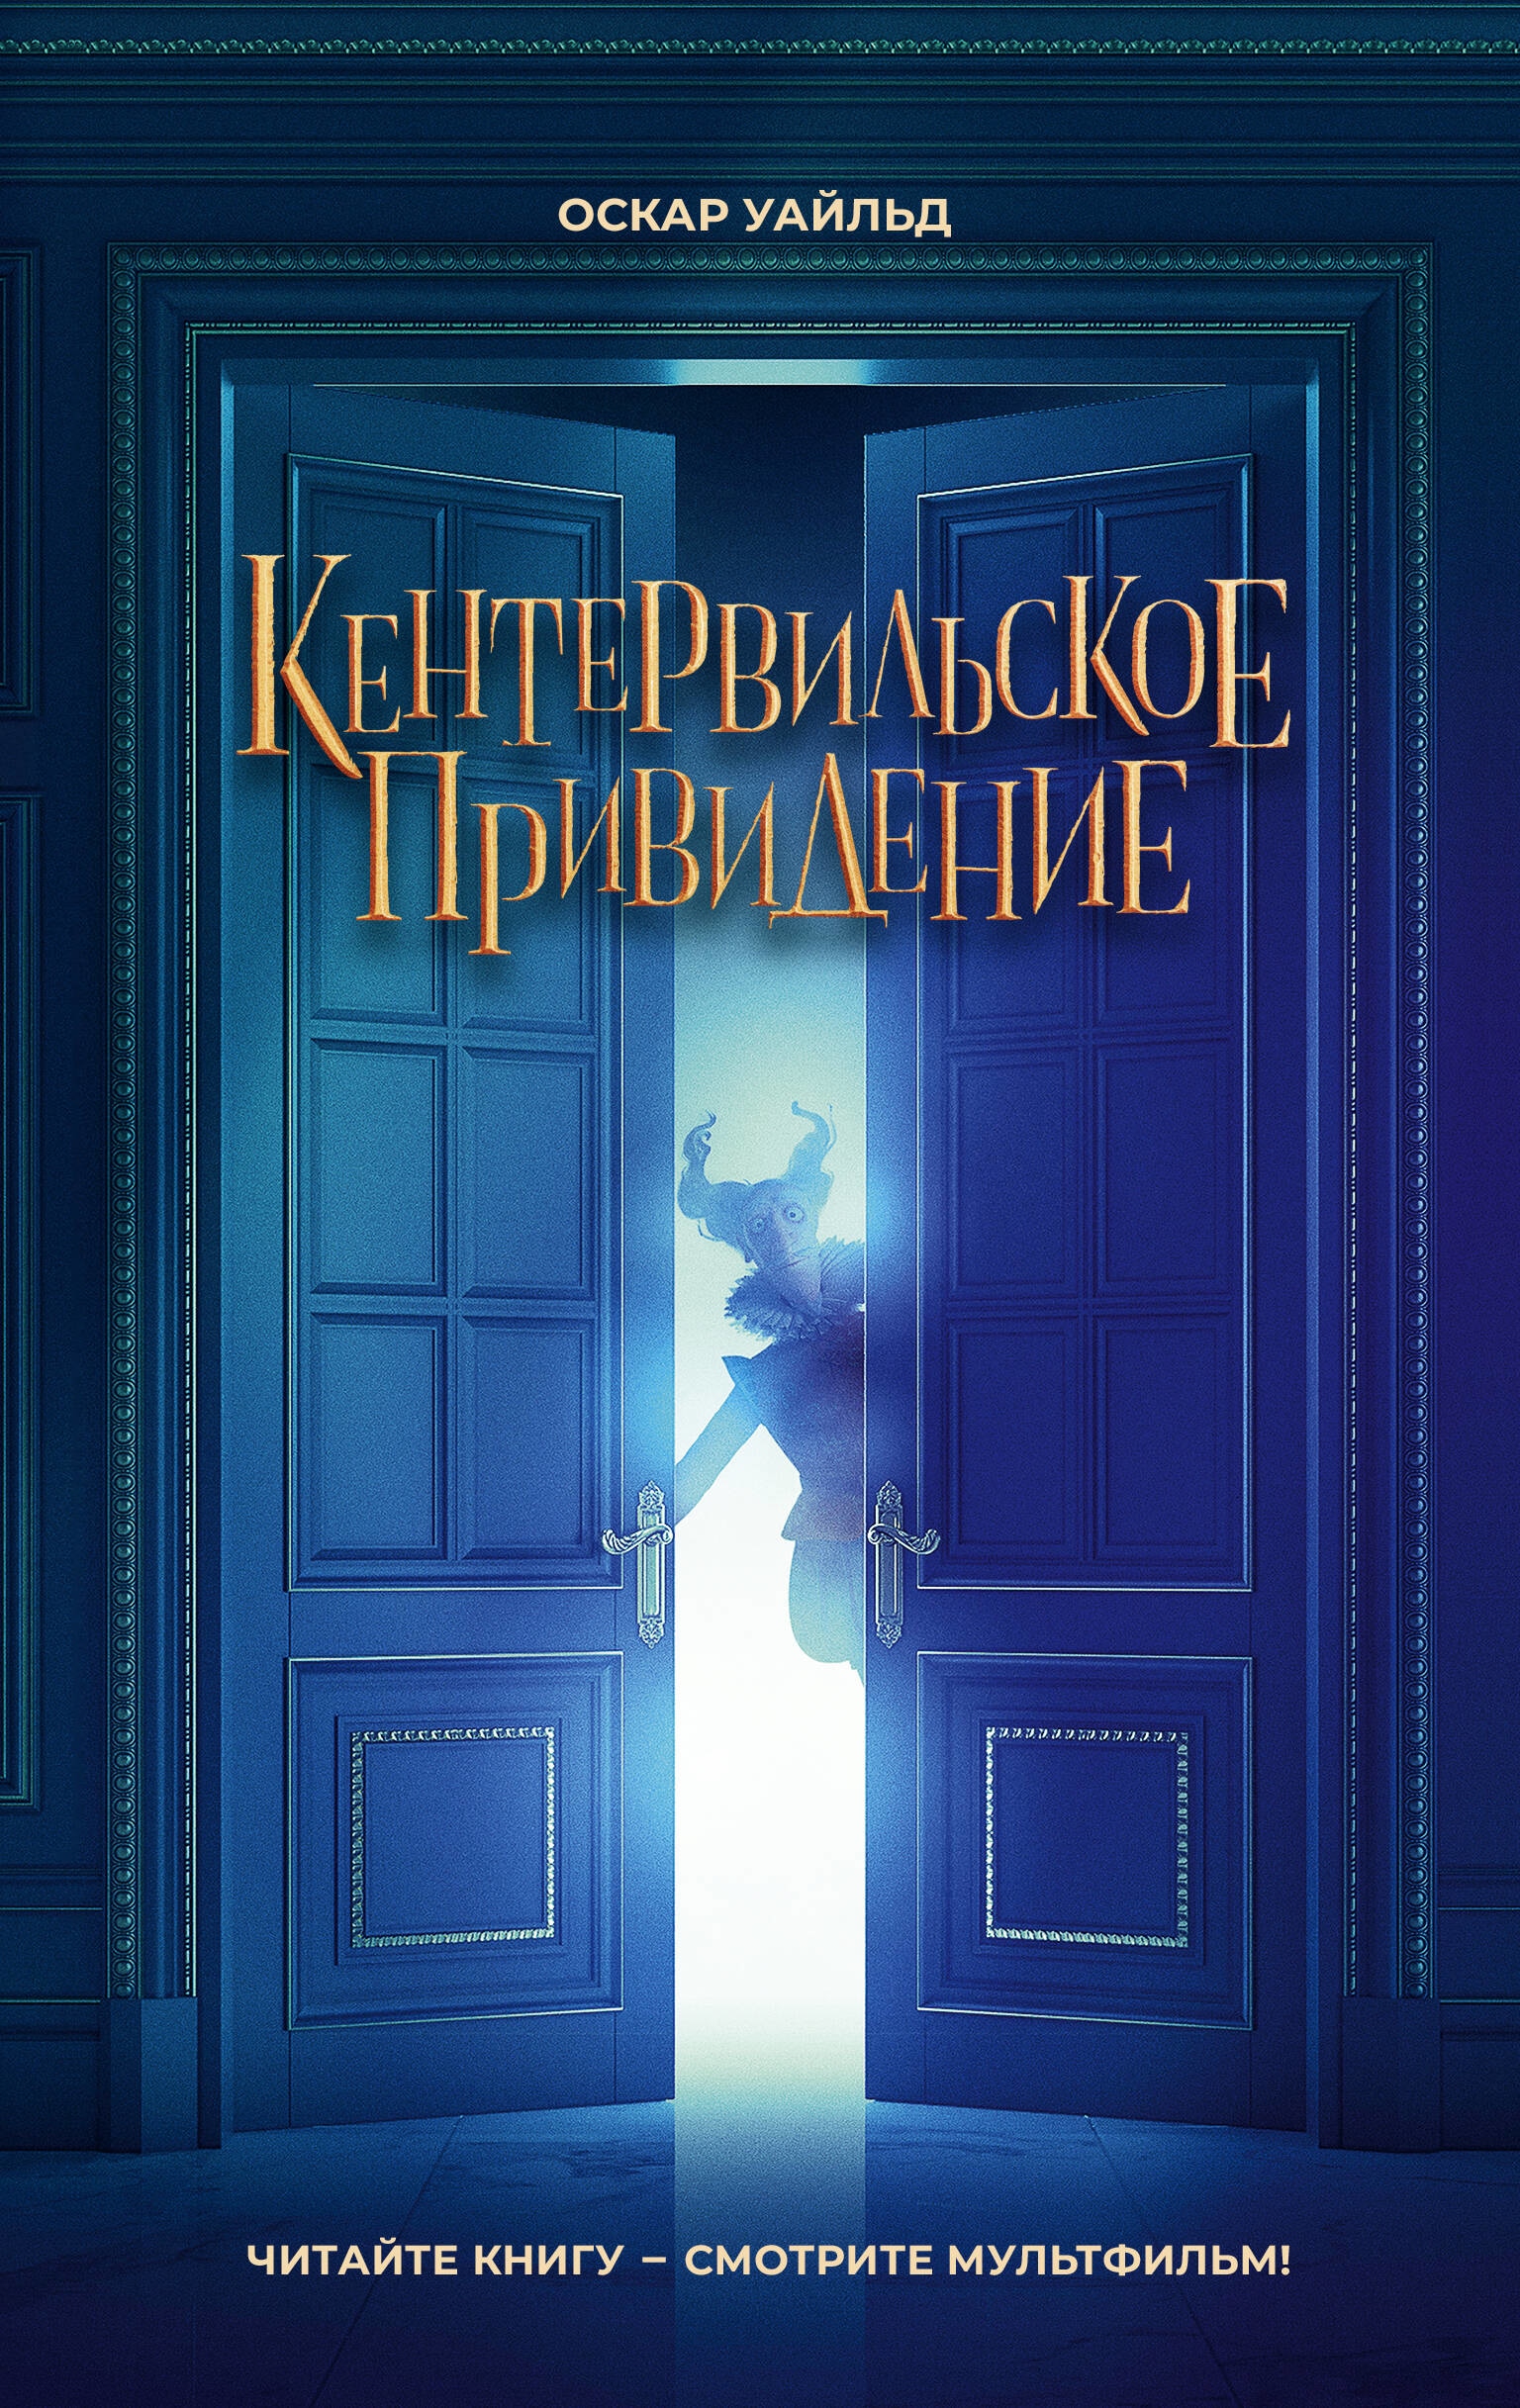 Book “Кентервильское привидение” by Оскар Уайльд — 2023